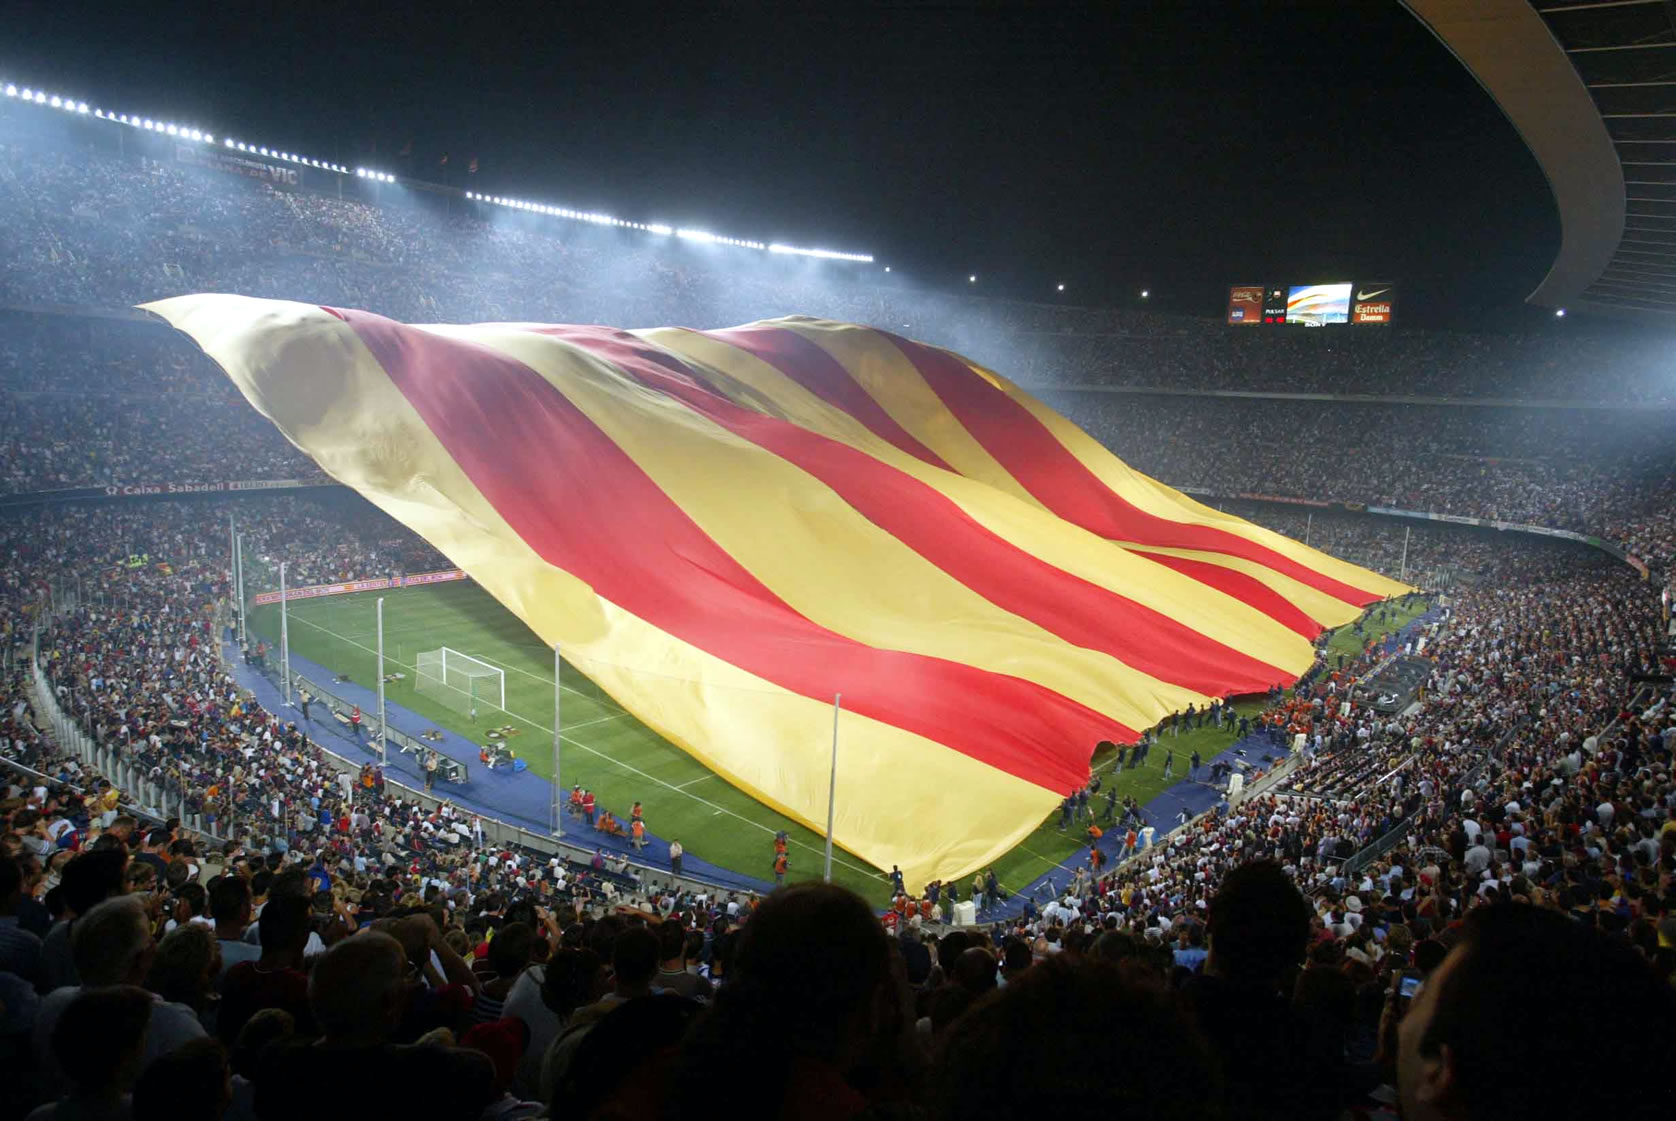 Стадион флаги. Флаги на стадионе. Флаги стадион болельщики Барселоны. Барселона флаг Каталунья. Прапор (стадион).